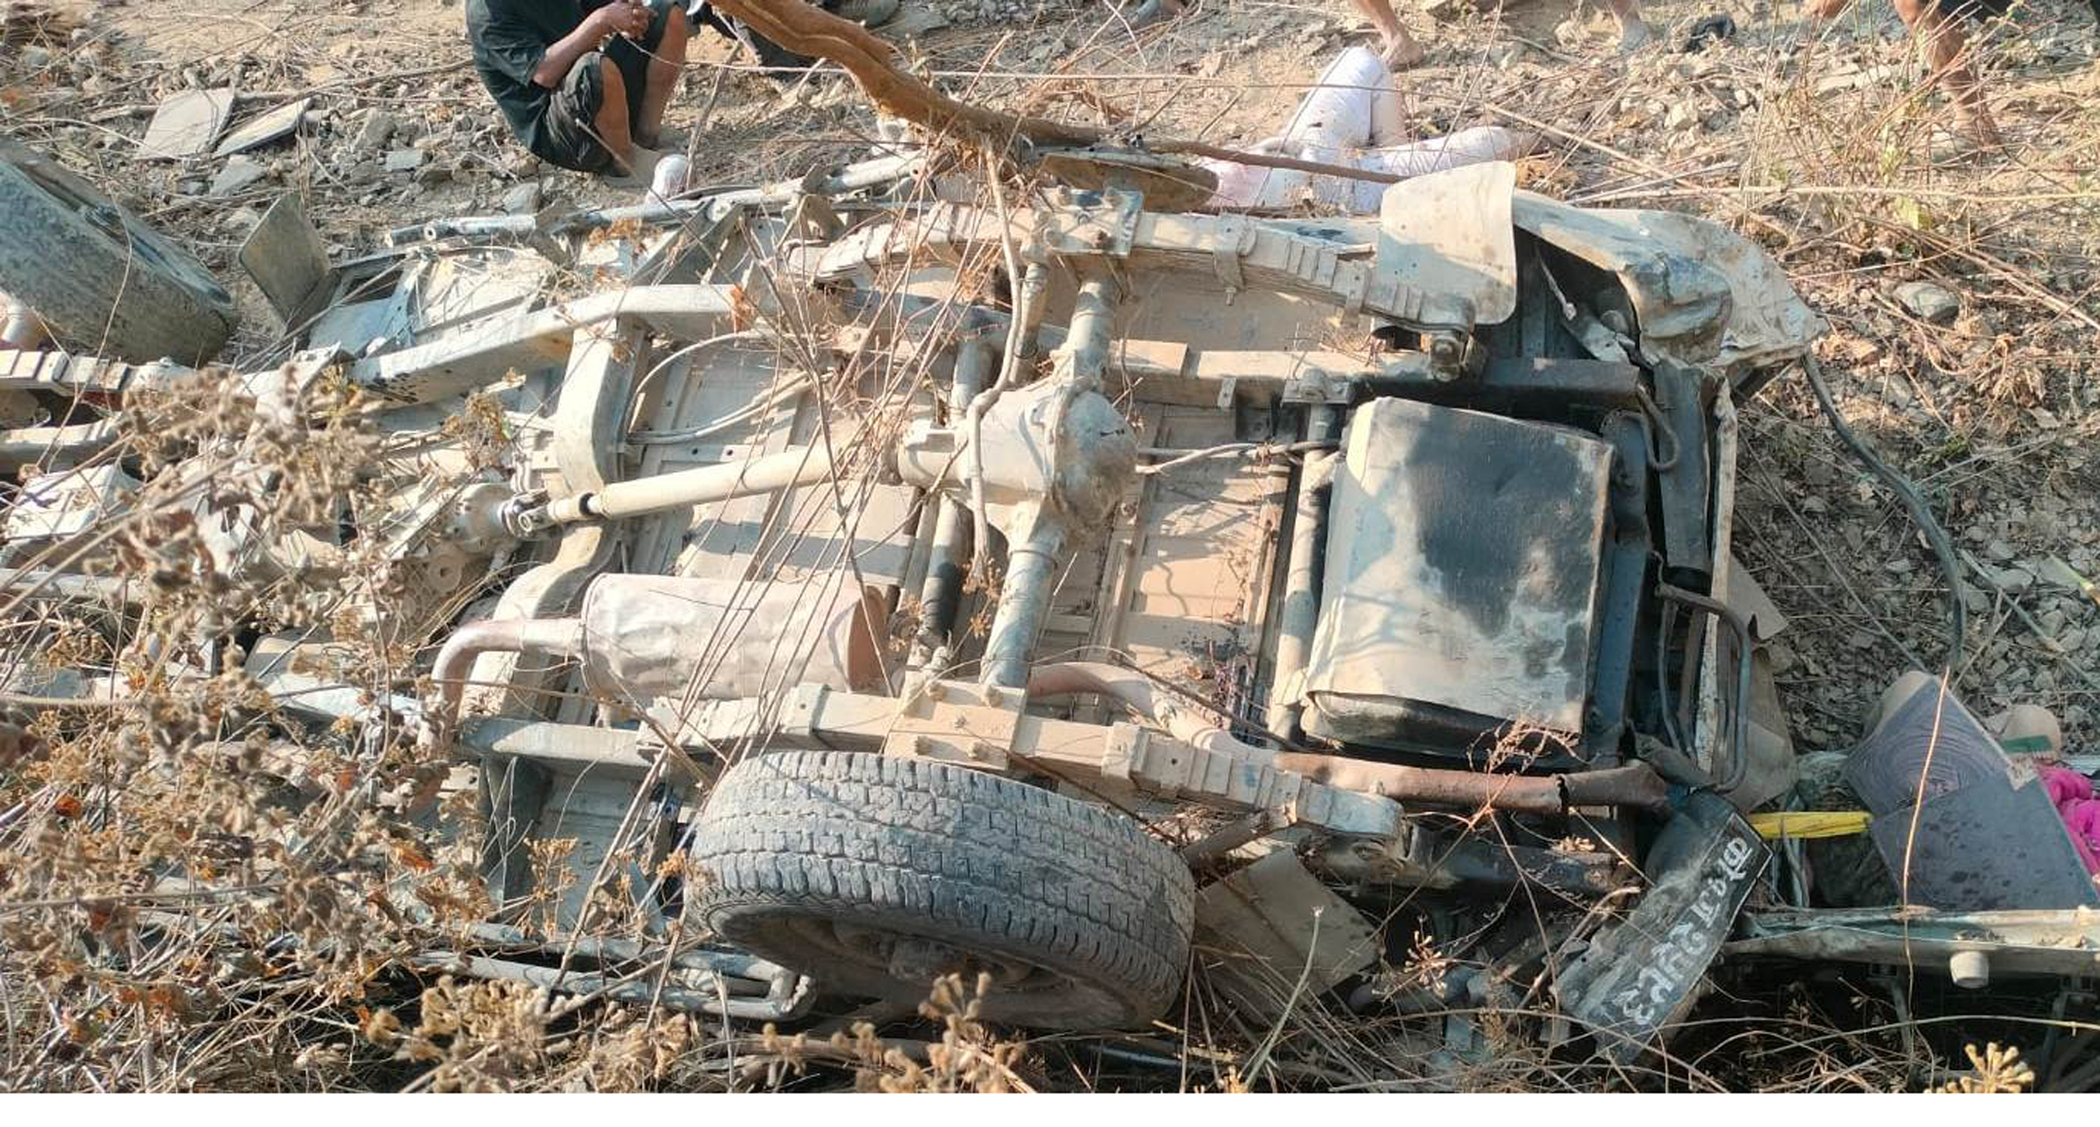 6 dies in Udayapur jeep accident